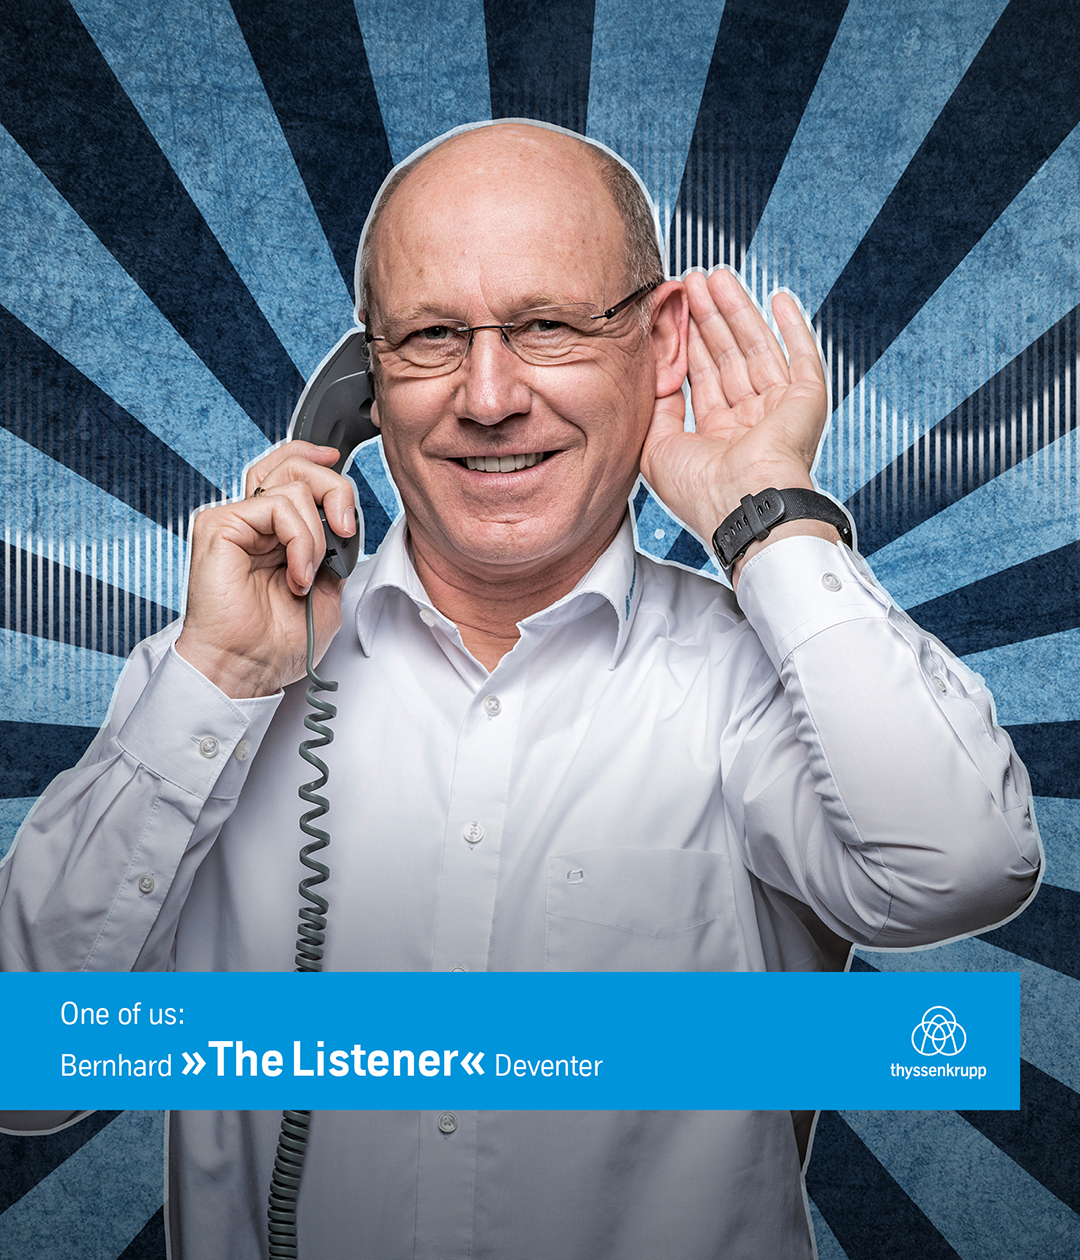 Bernhard >>The Listener<< Deventer >>Bernhard Deventer<<